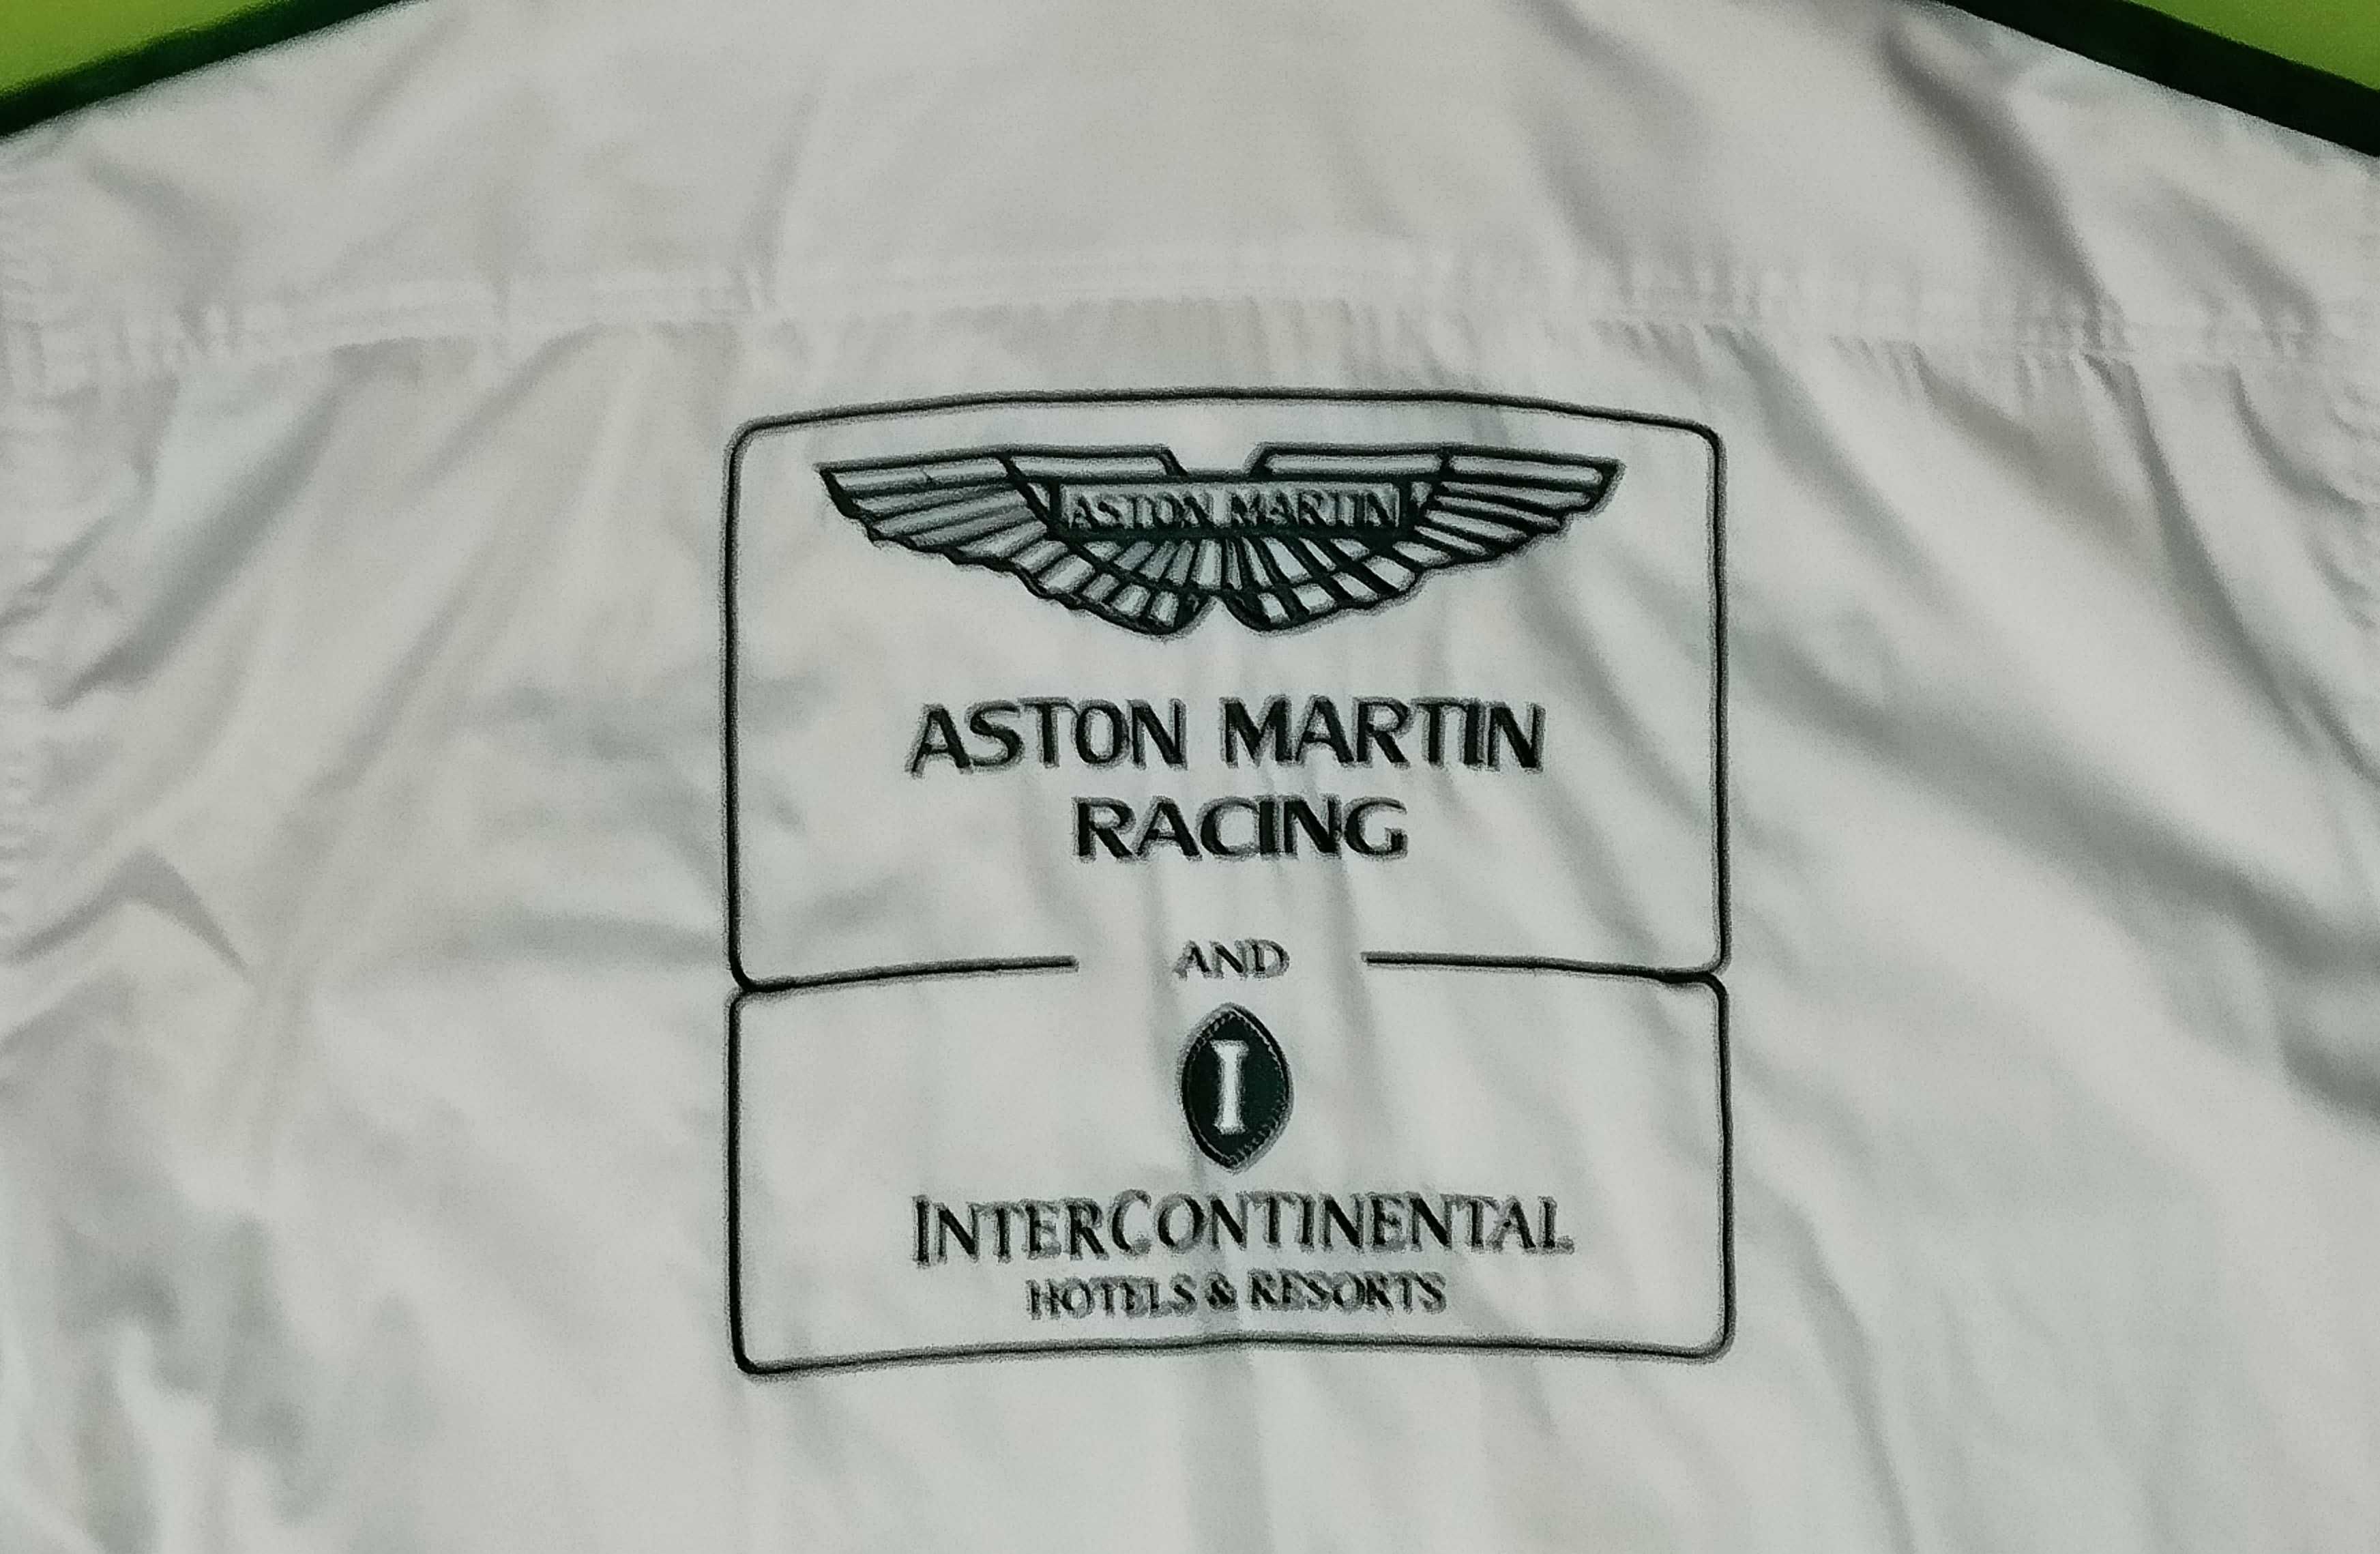 Camasa racing Aston Martin HACKETT LONDON  mar. XXL  55 Lei negociabil